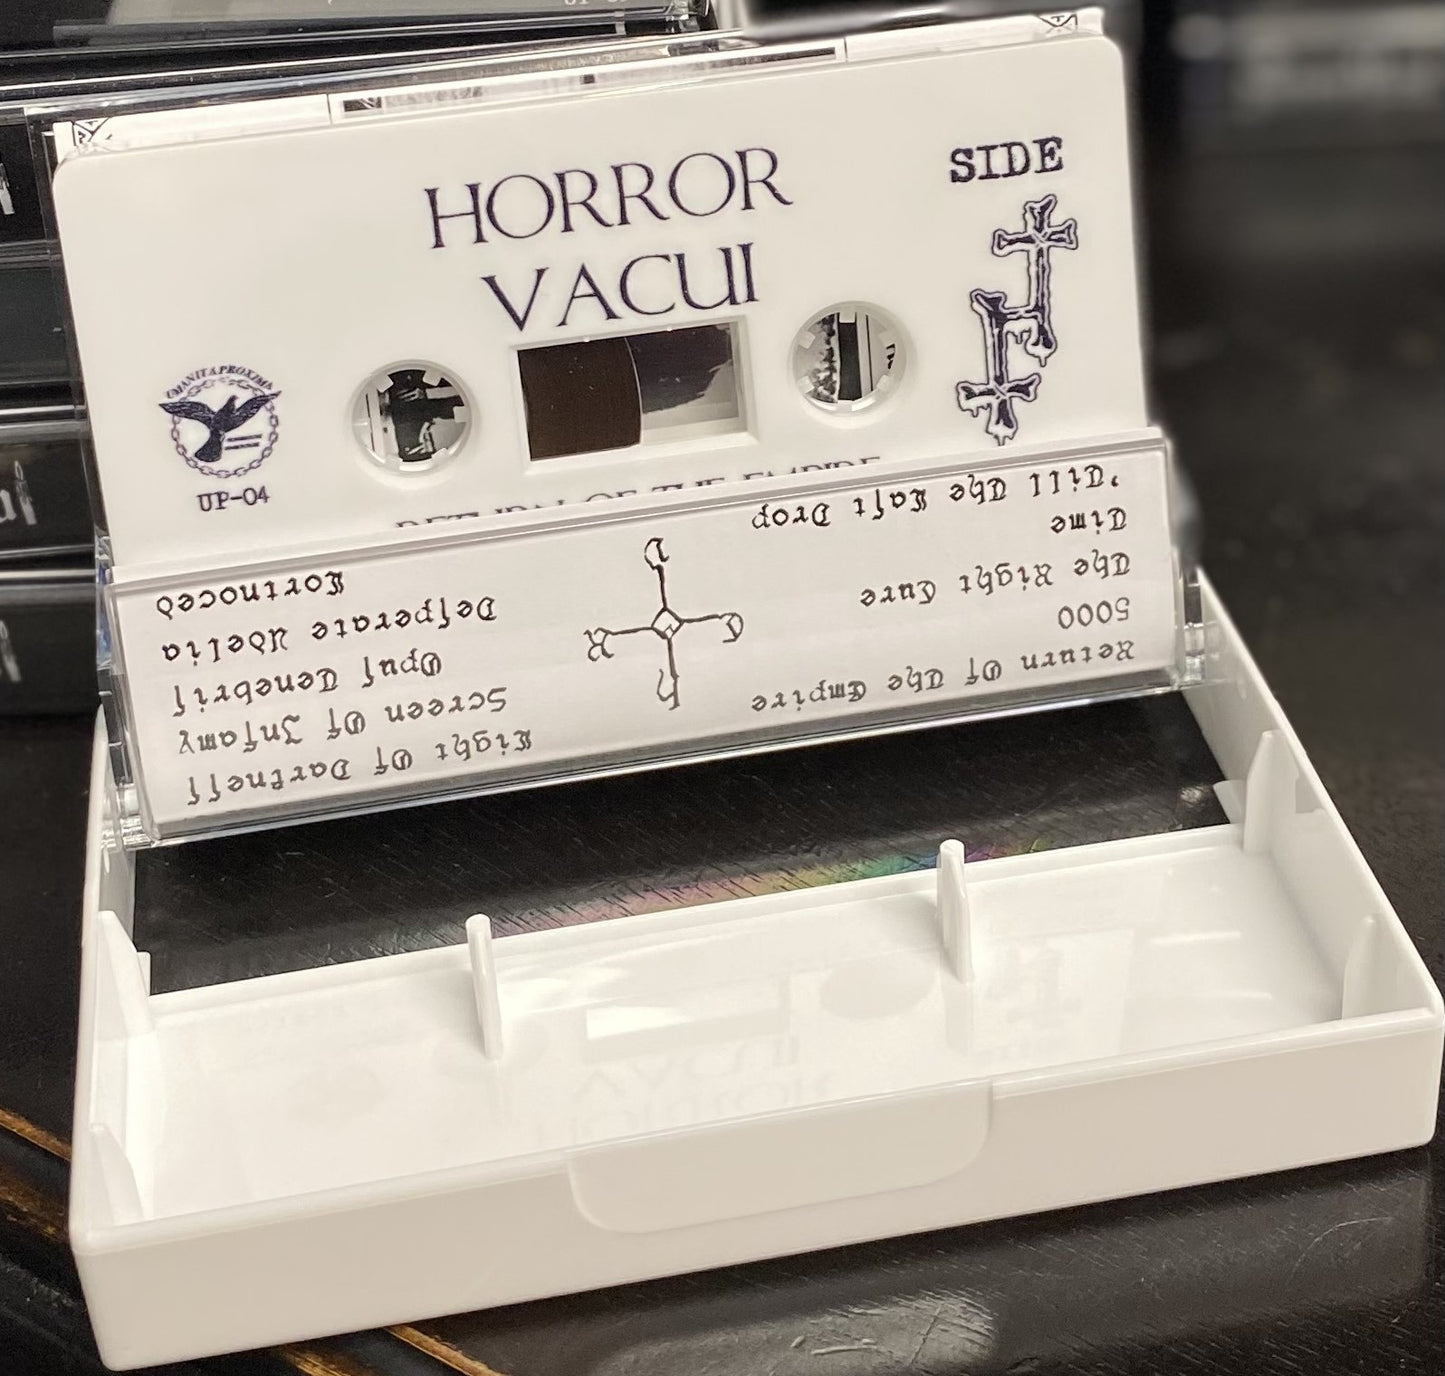 HORROR VACUI – Return Of The Empire Cassette